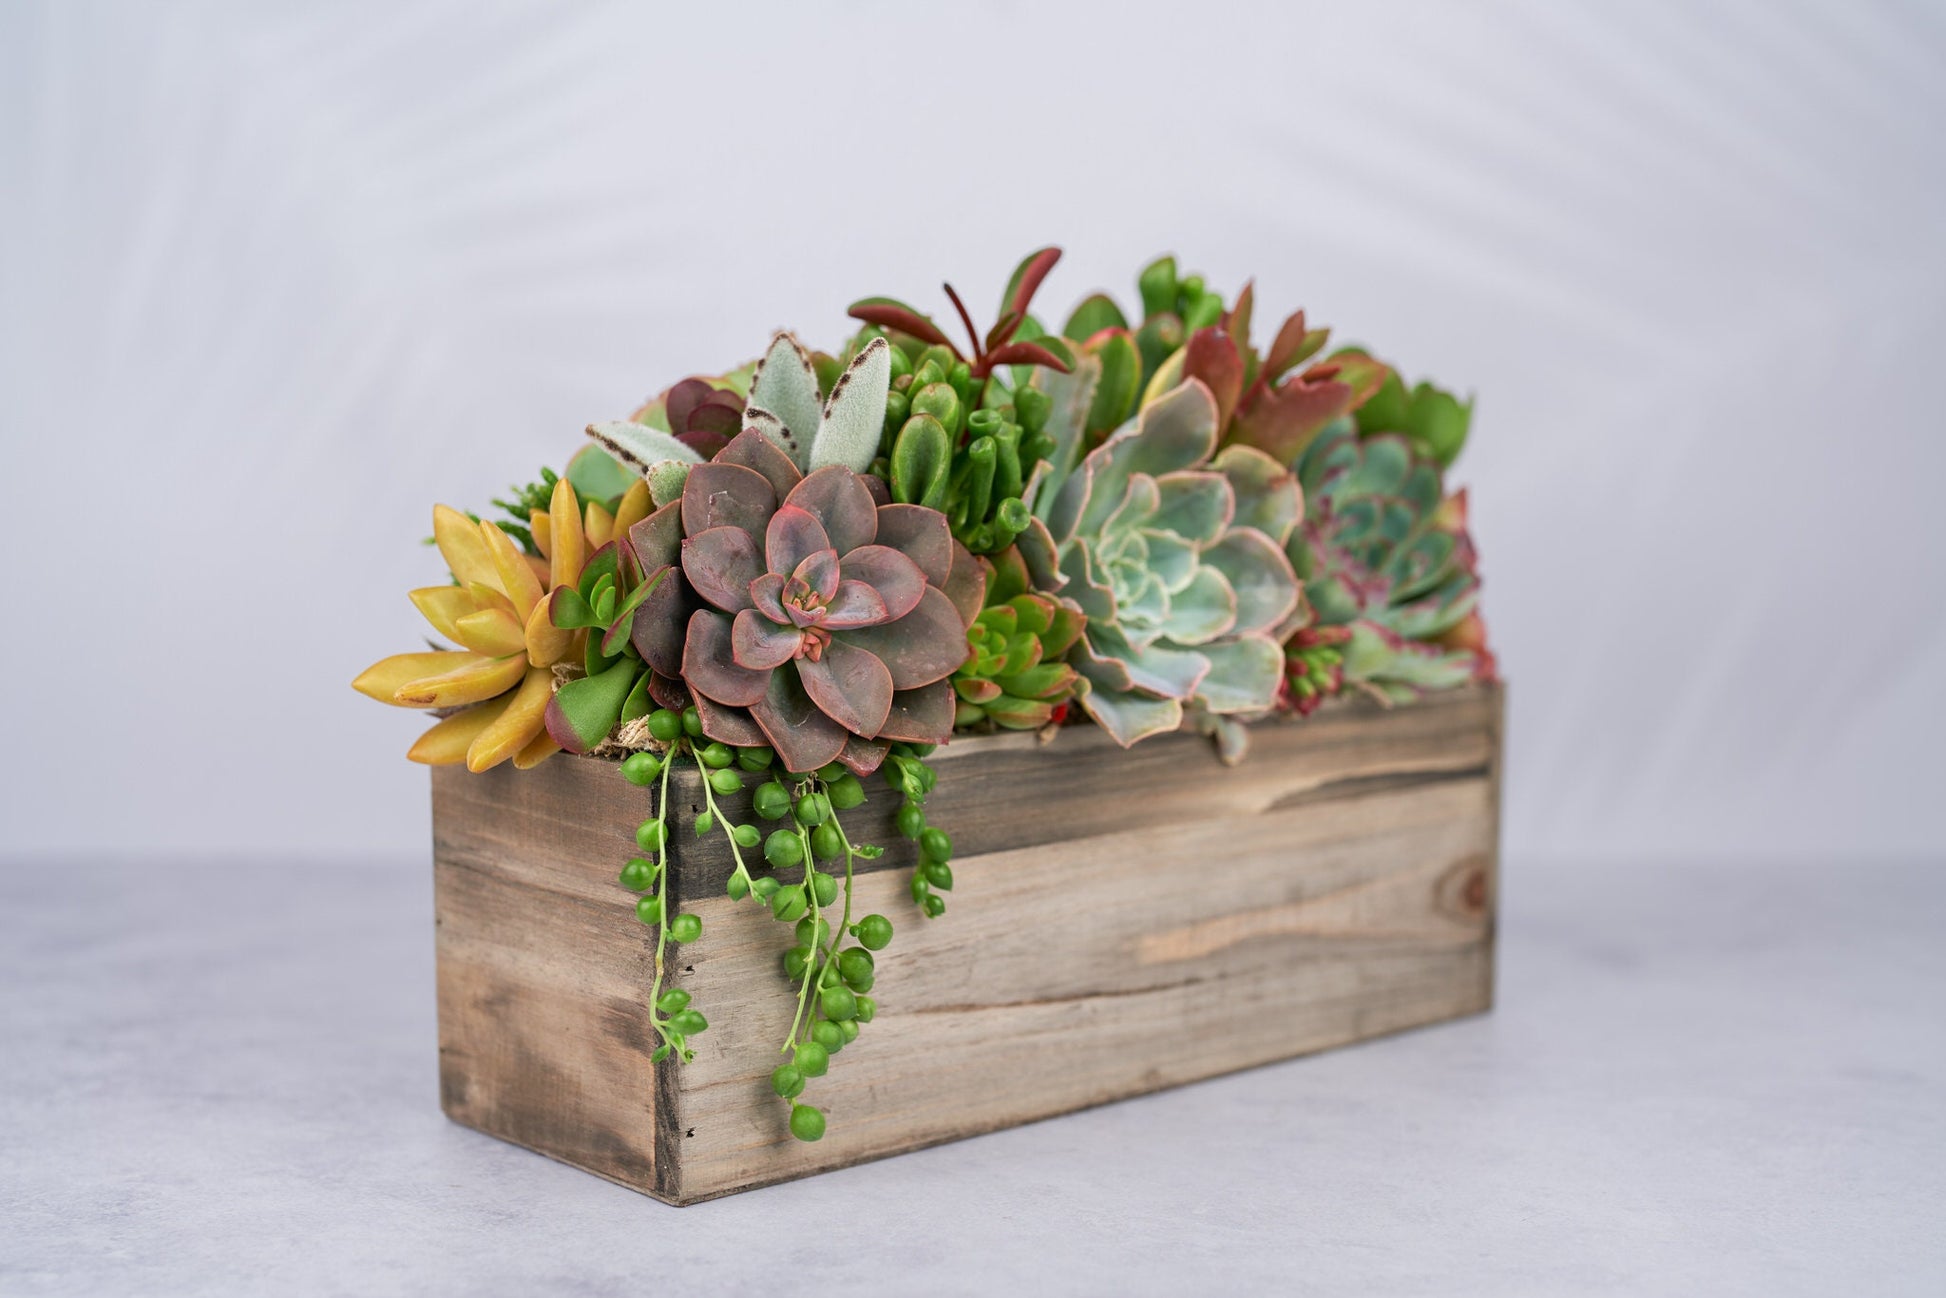 Rustic Wood Rectangle Succulent Arrangement Planter: Living Succulent Gift or Centerpiece for Weddings & Events